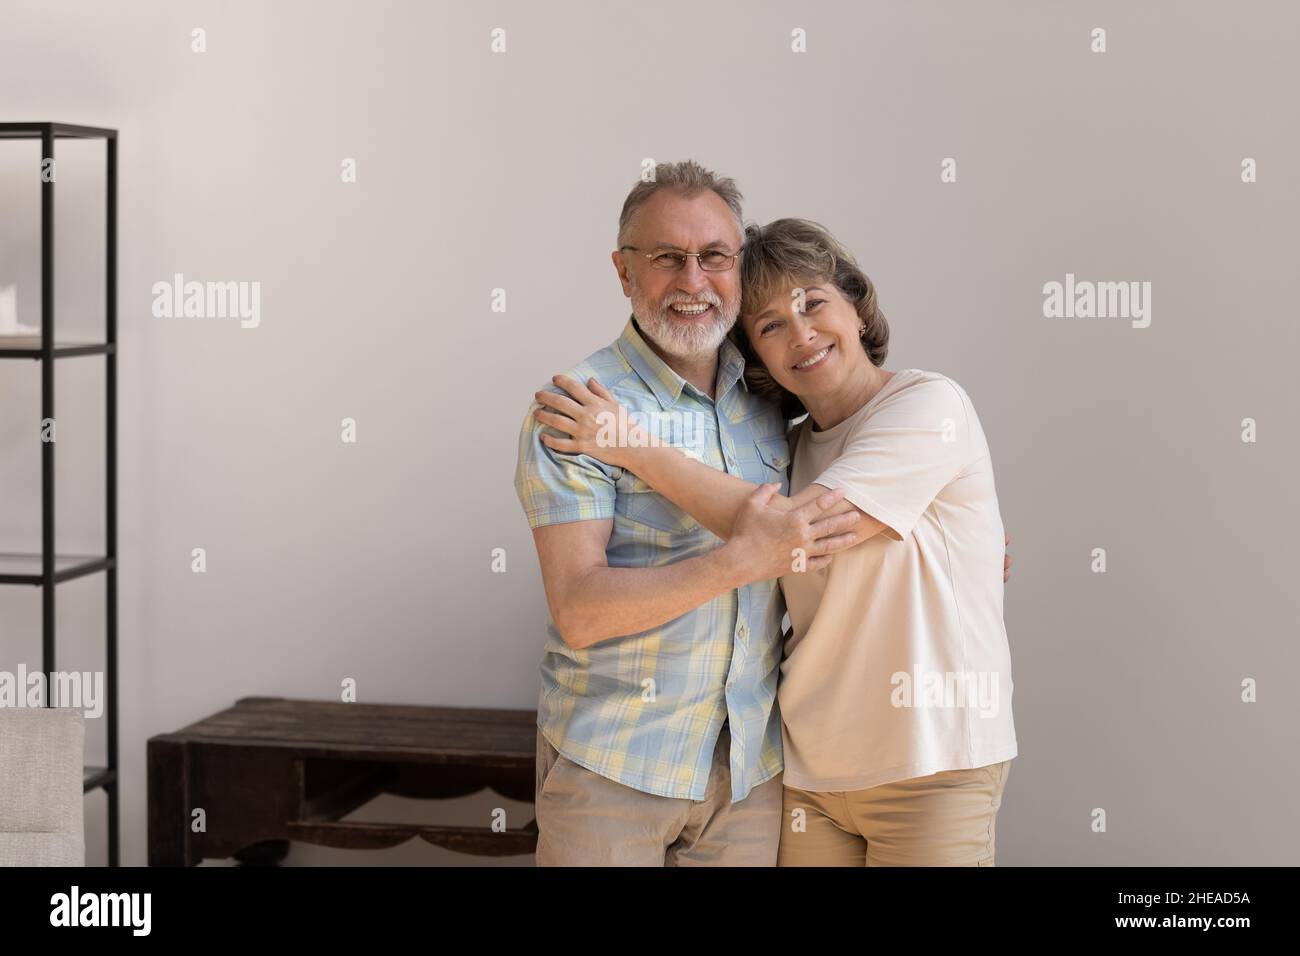 Portrait of affectionate loving older family couple. Stock Photo